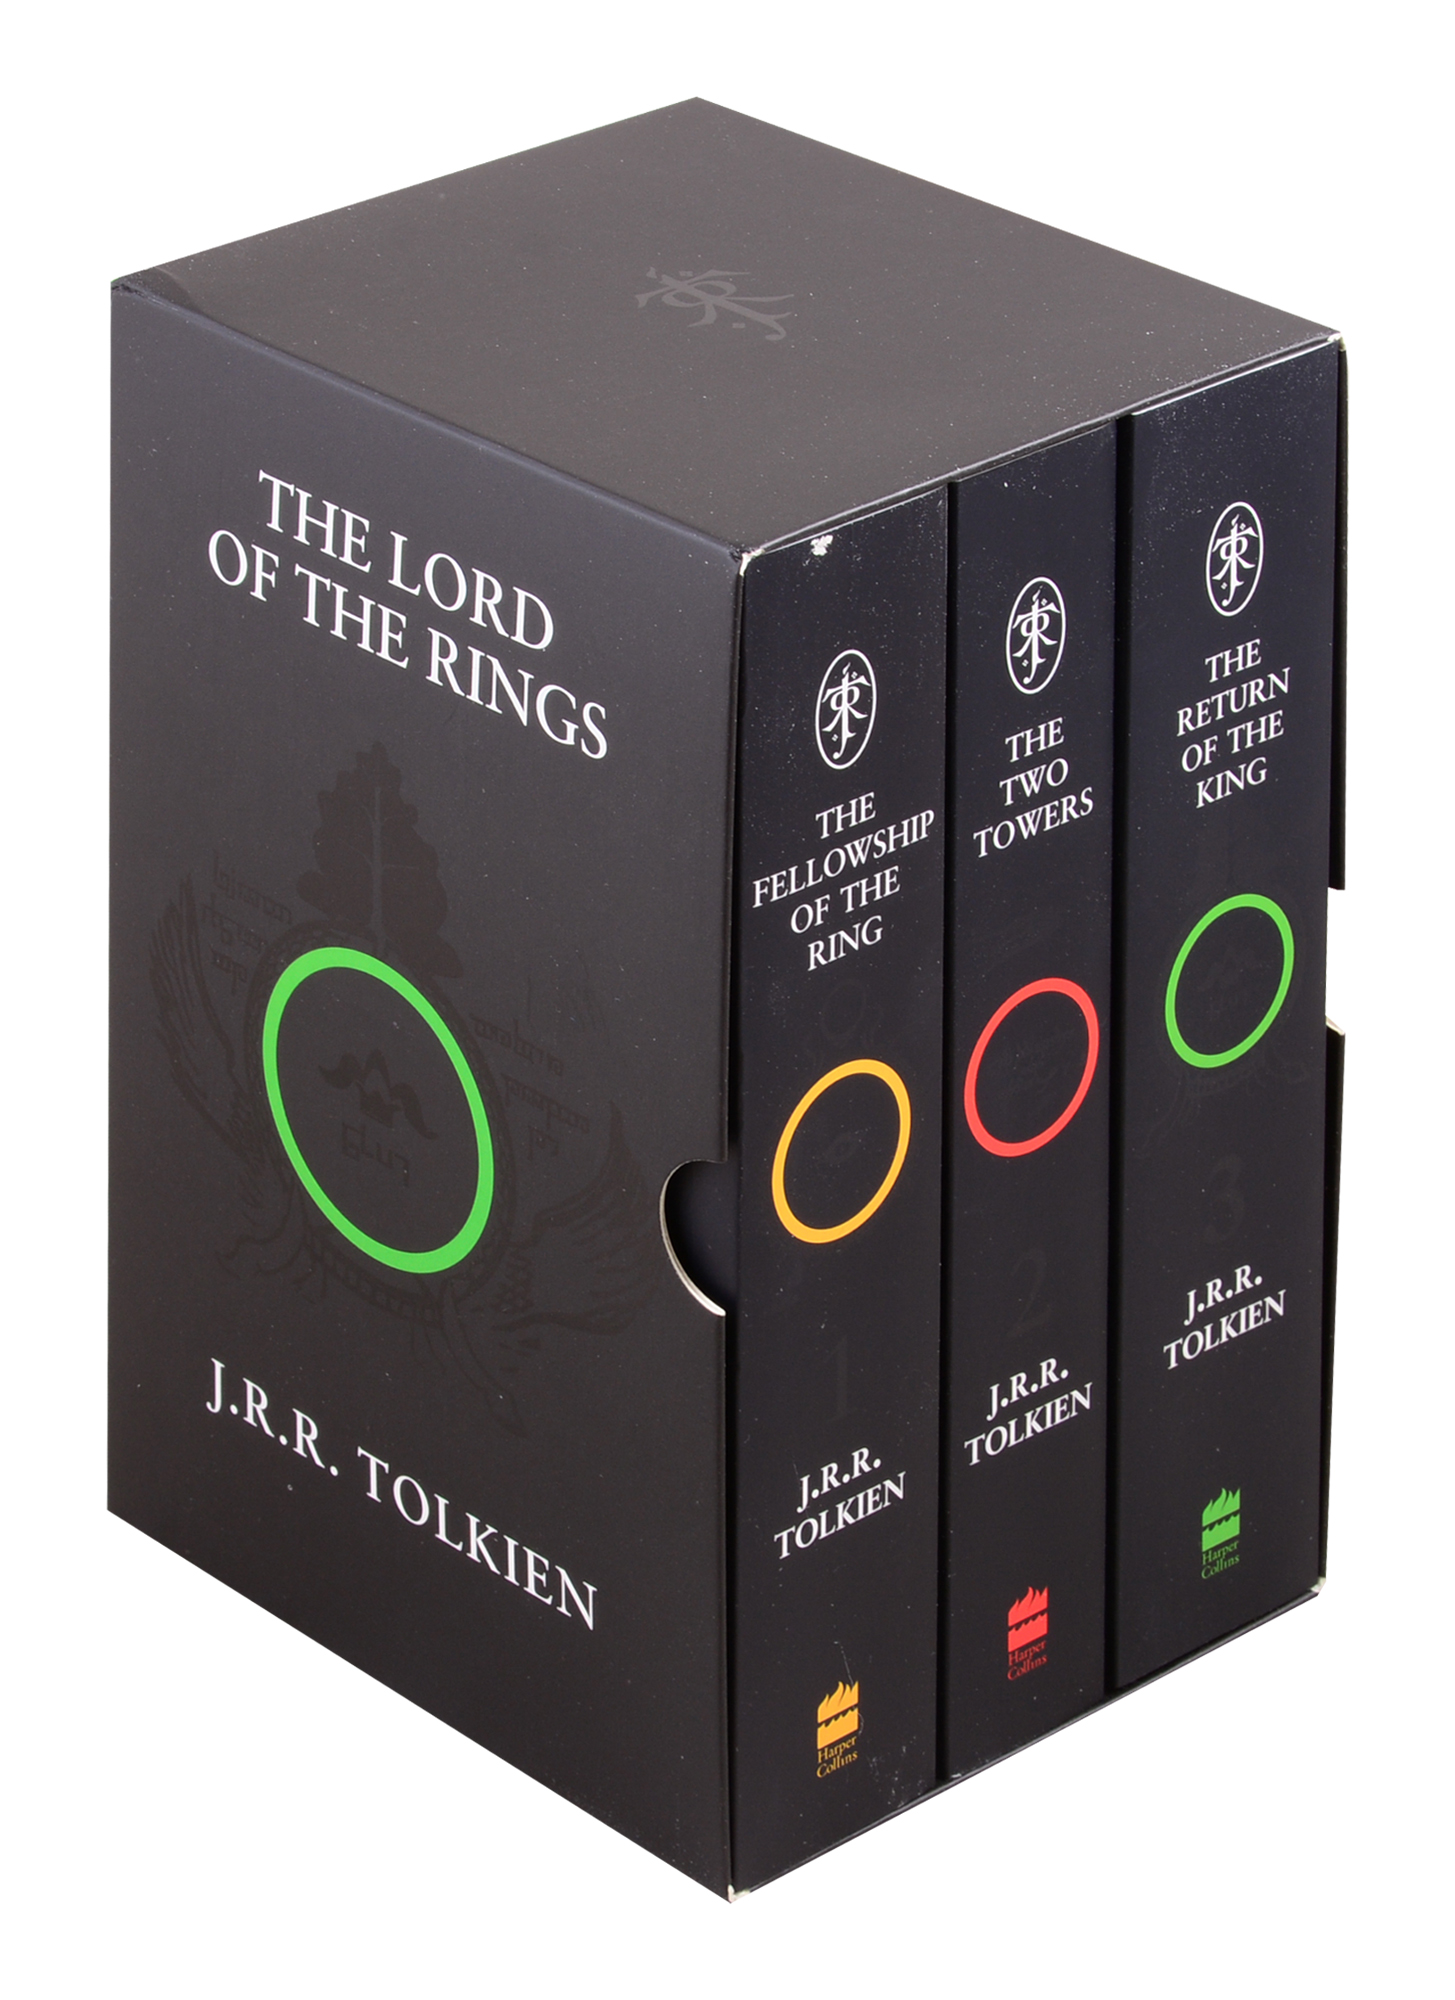 Толкин Джон Рональд Руэл The Lord of the Ring: 3 книги в коробке цена и фото